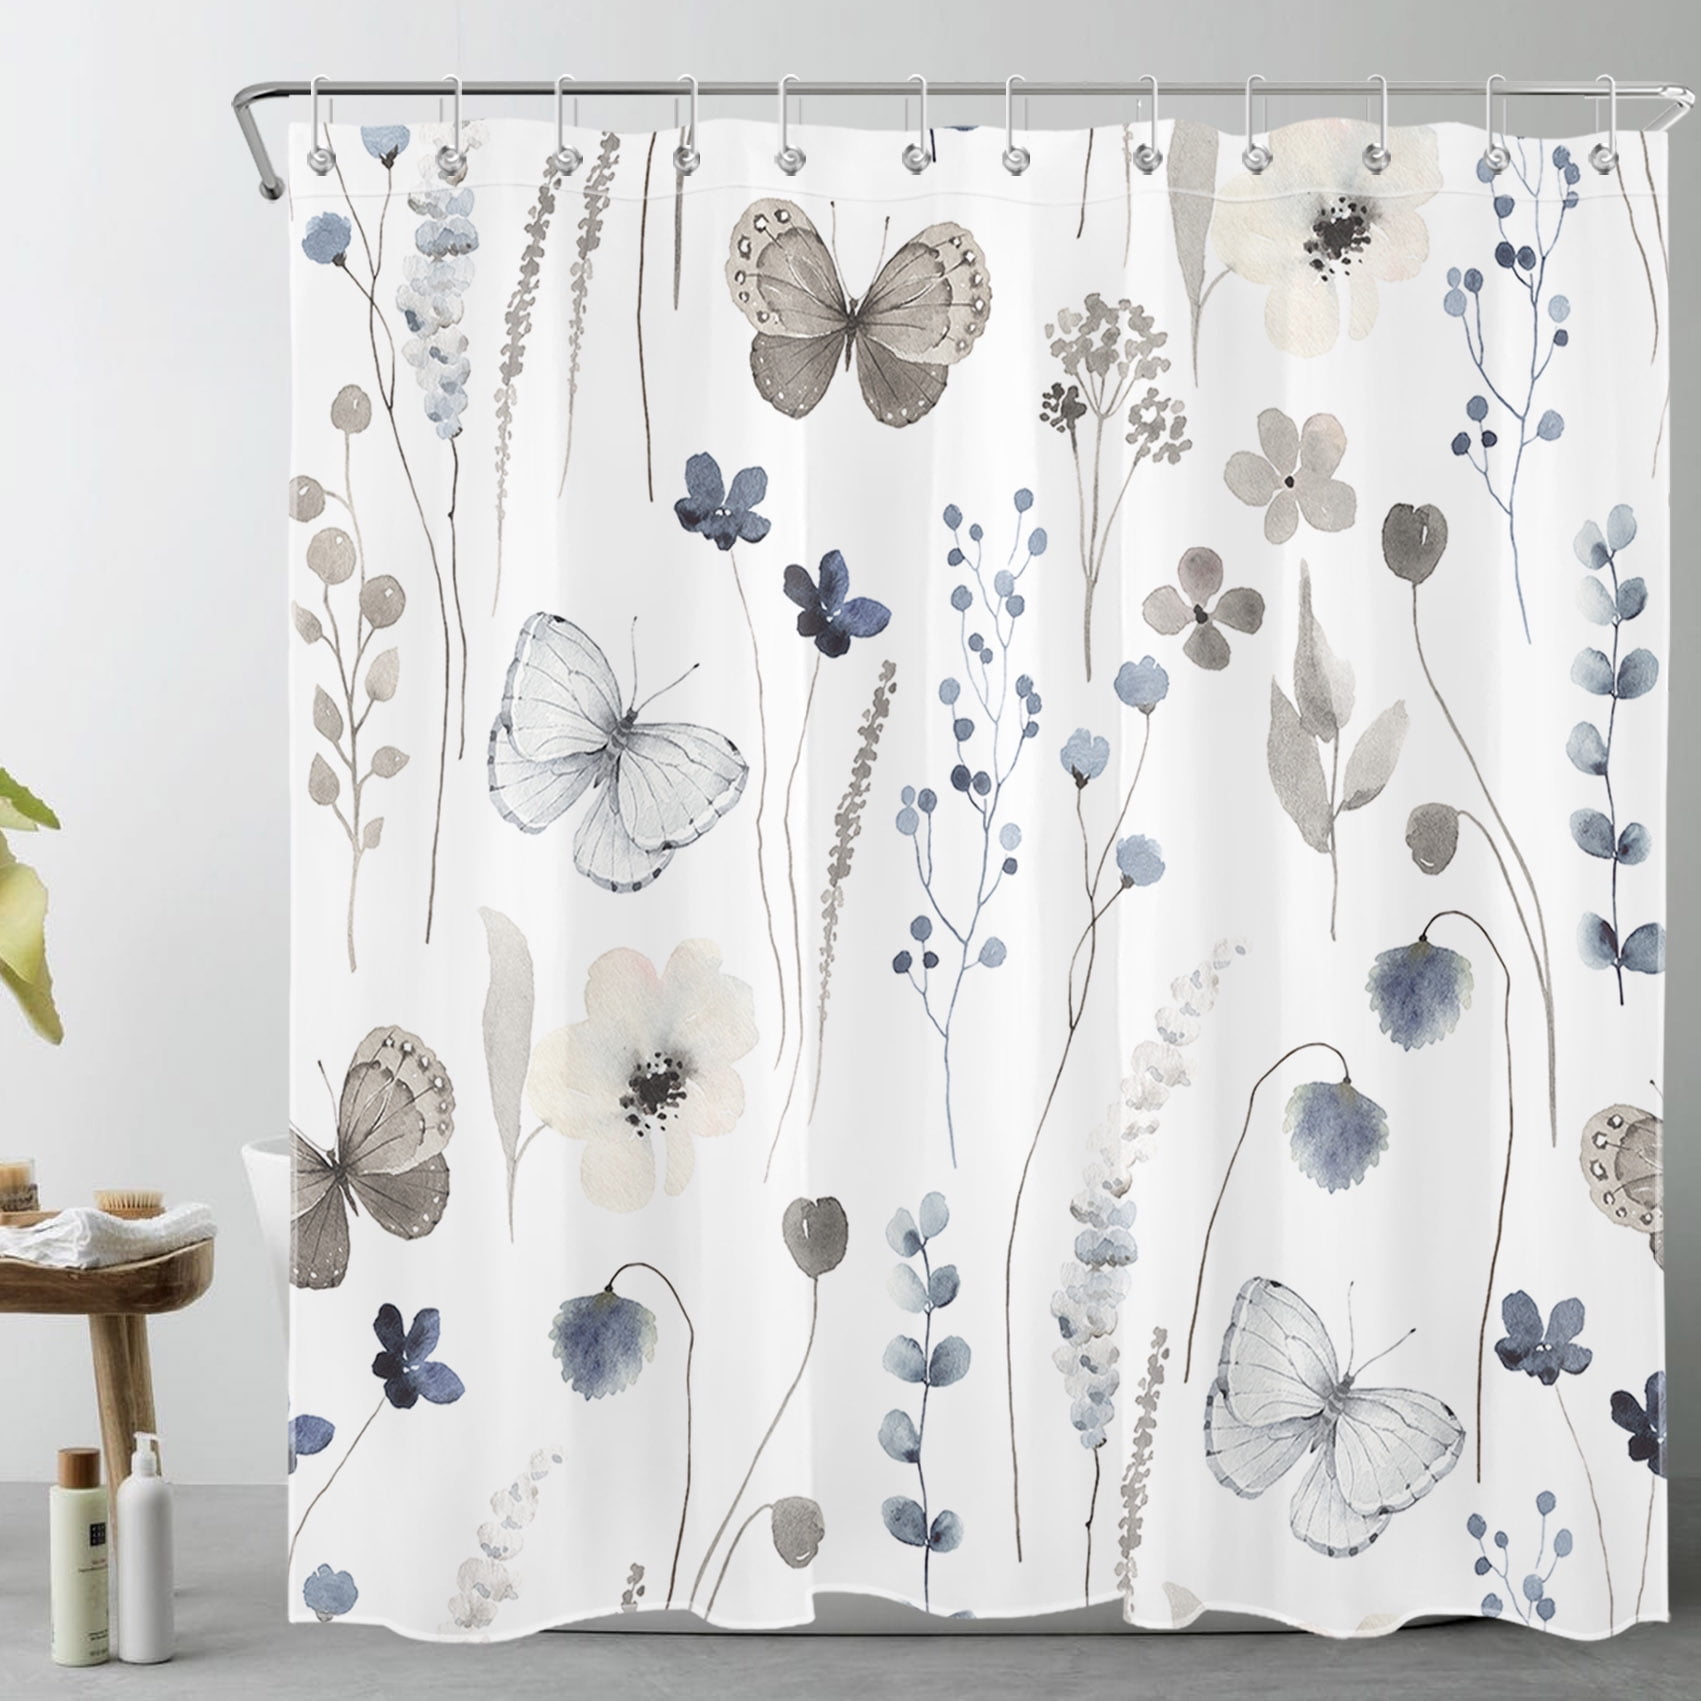 HVEST Grey Butterfly Shower Curtain for Bathroom,Vintage